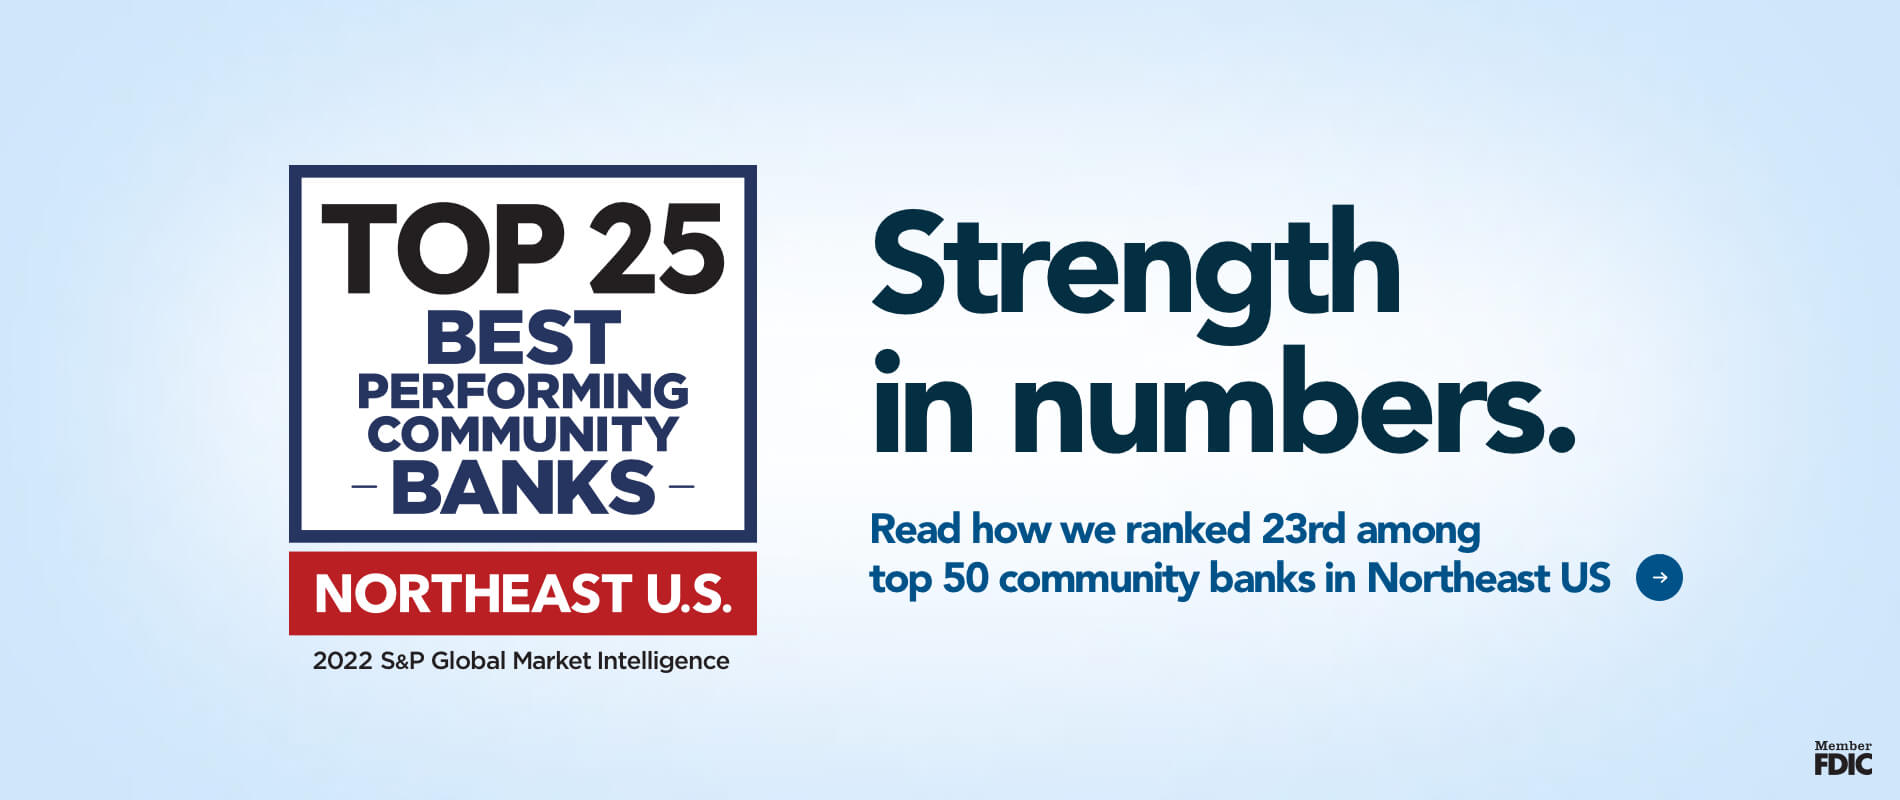 Top 25 banks